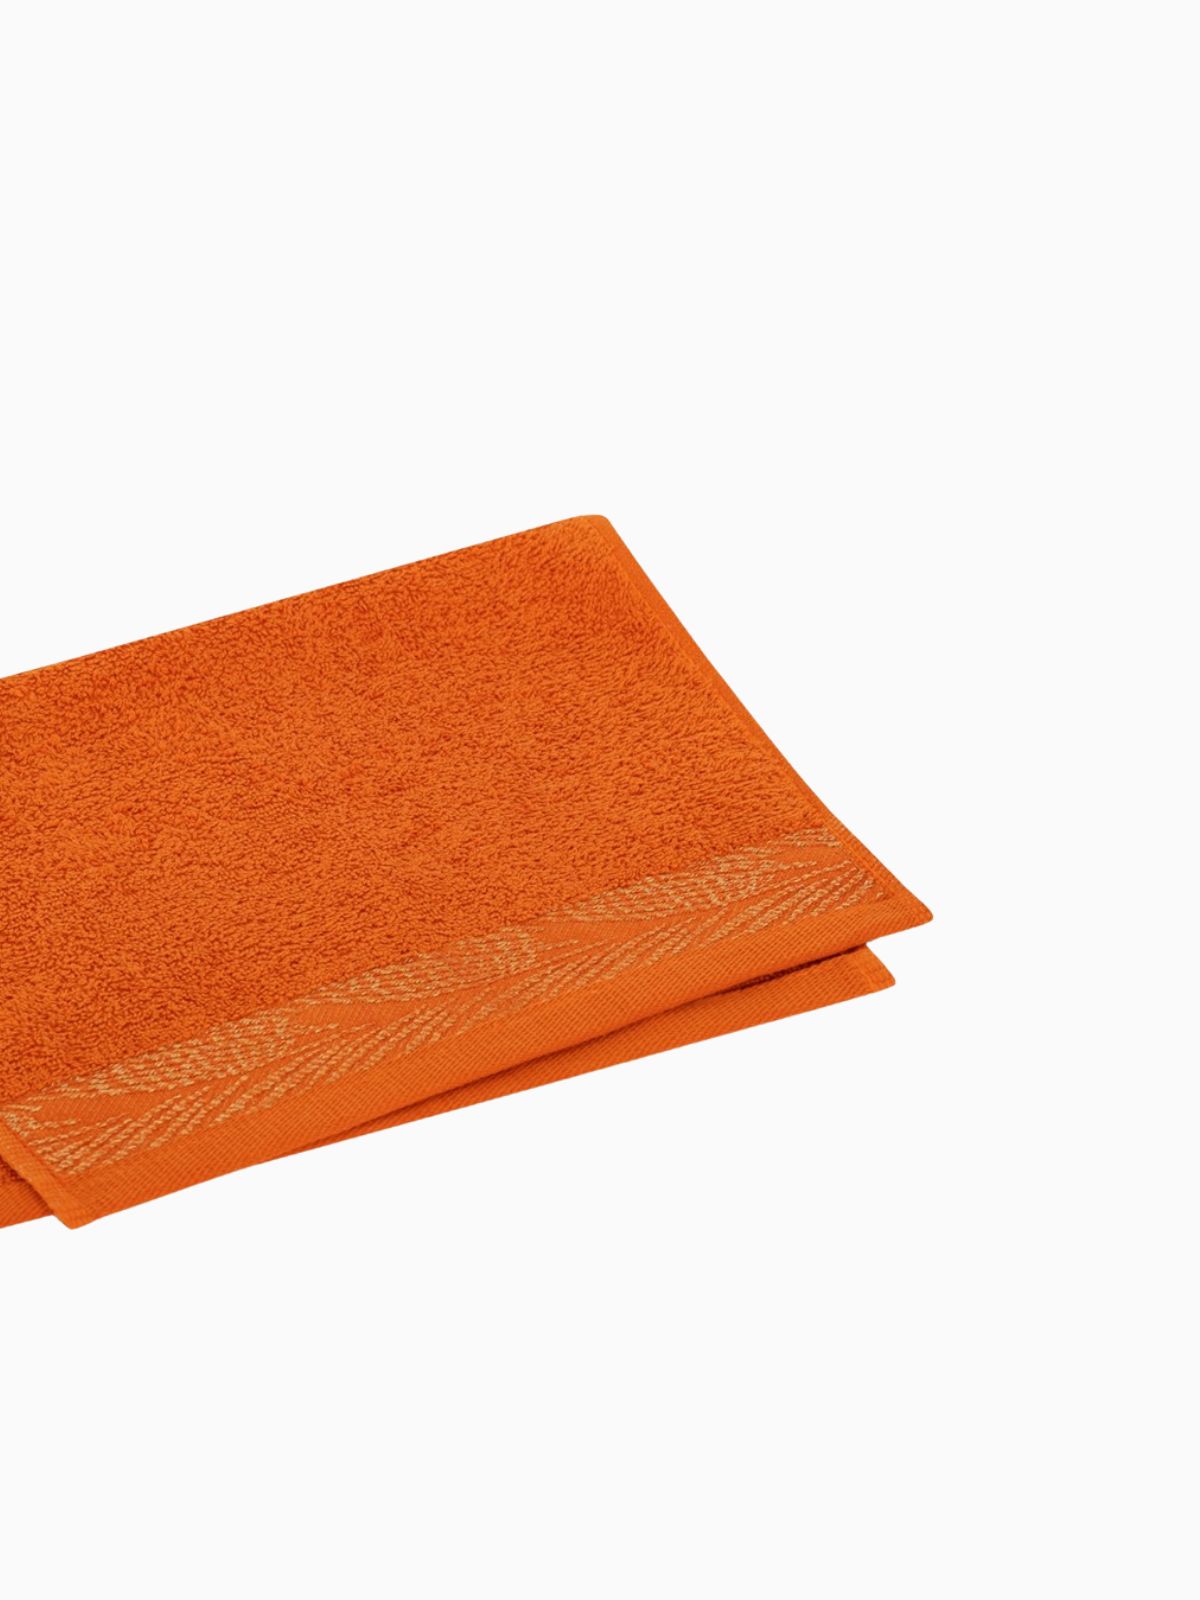 Asciugamano Allium in 100% cotone, colore arancione 30x50 cm.-3